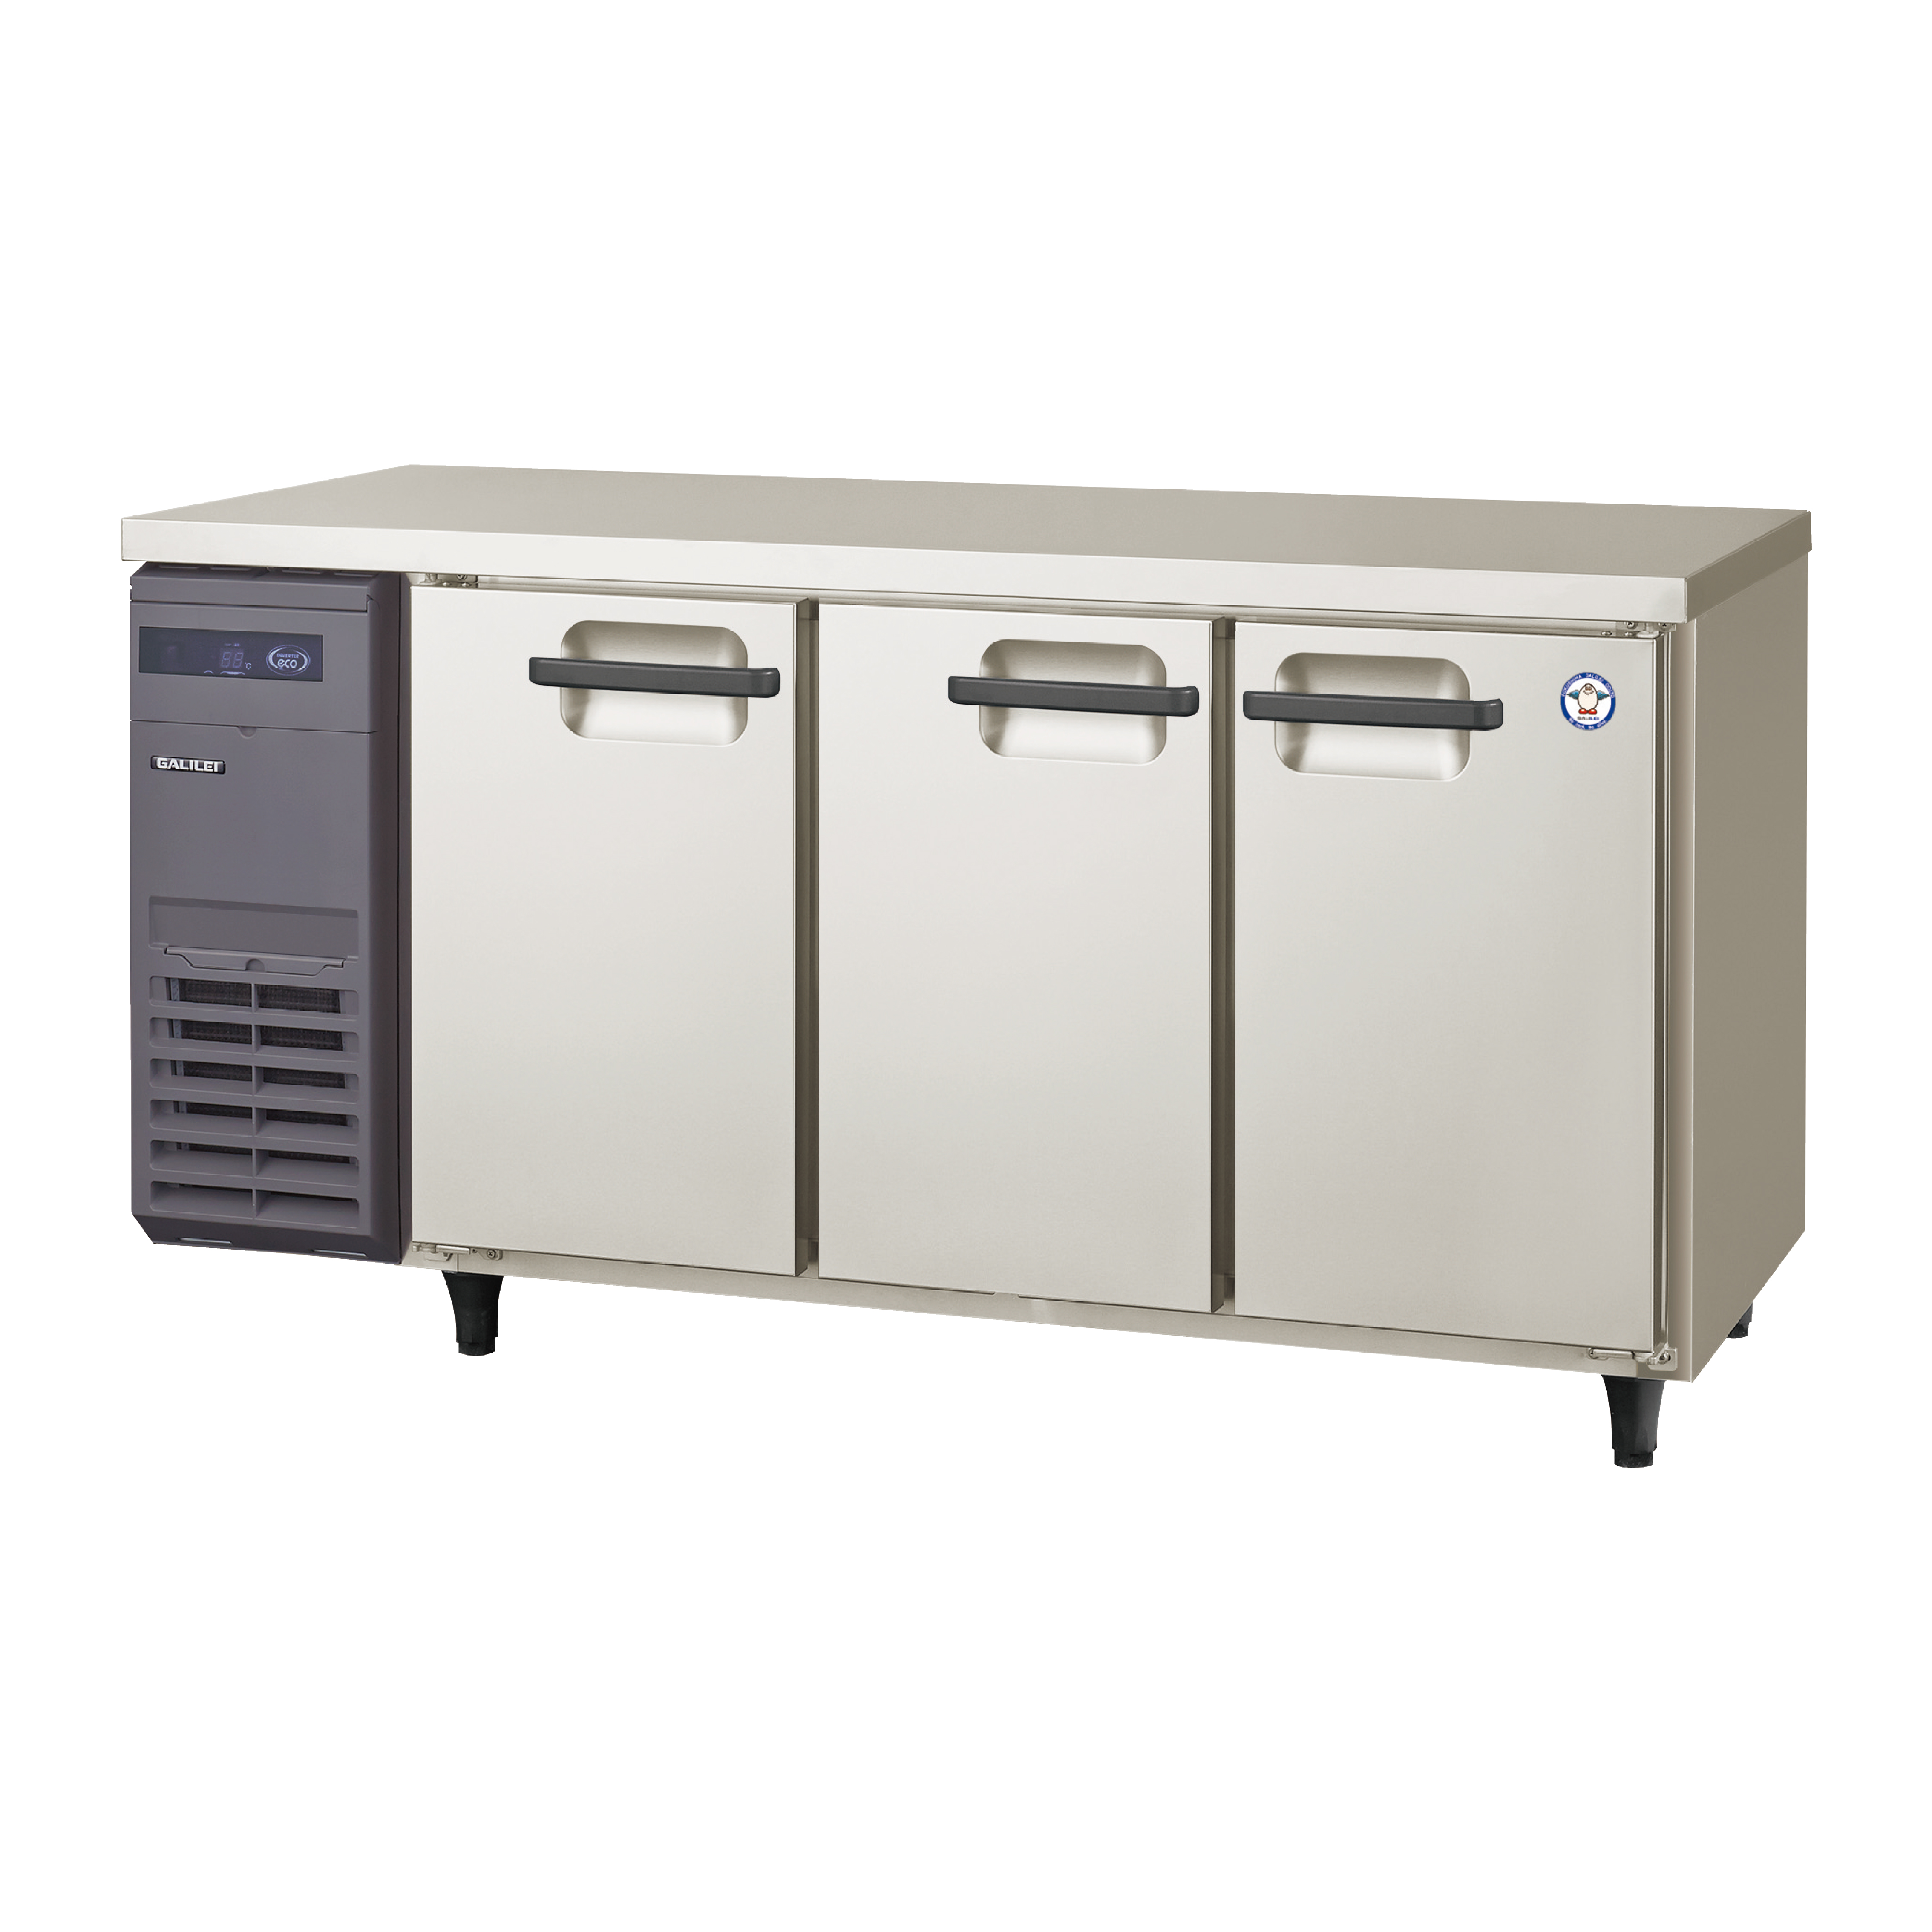 LCU-151PM-E - 超薄型奥行き450mmタイプヨコ型冷蔵庫 - 冷凍冷蔵庫 